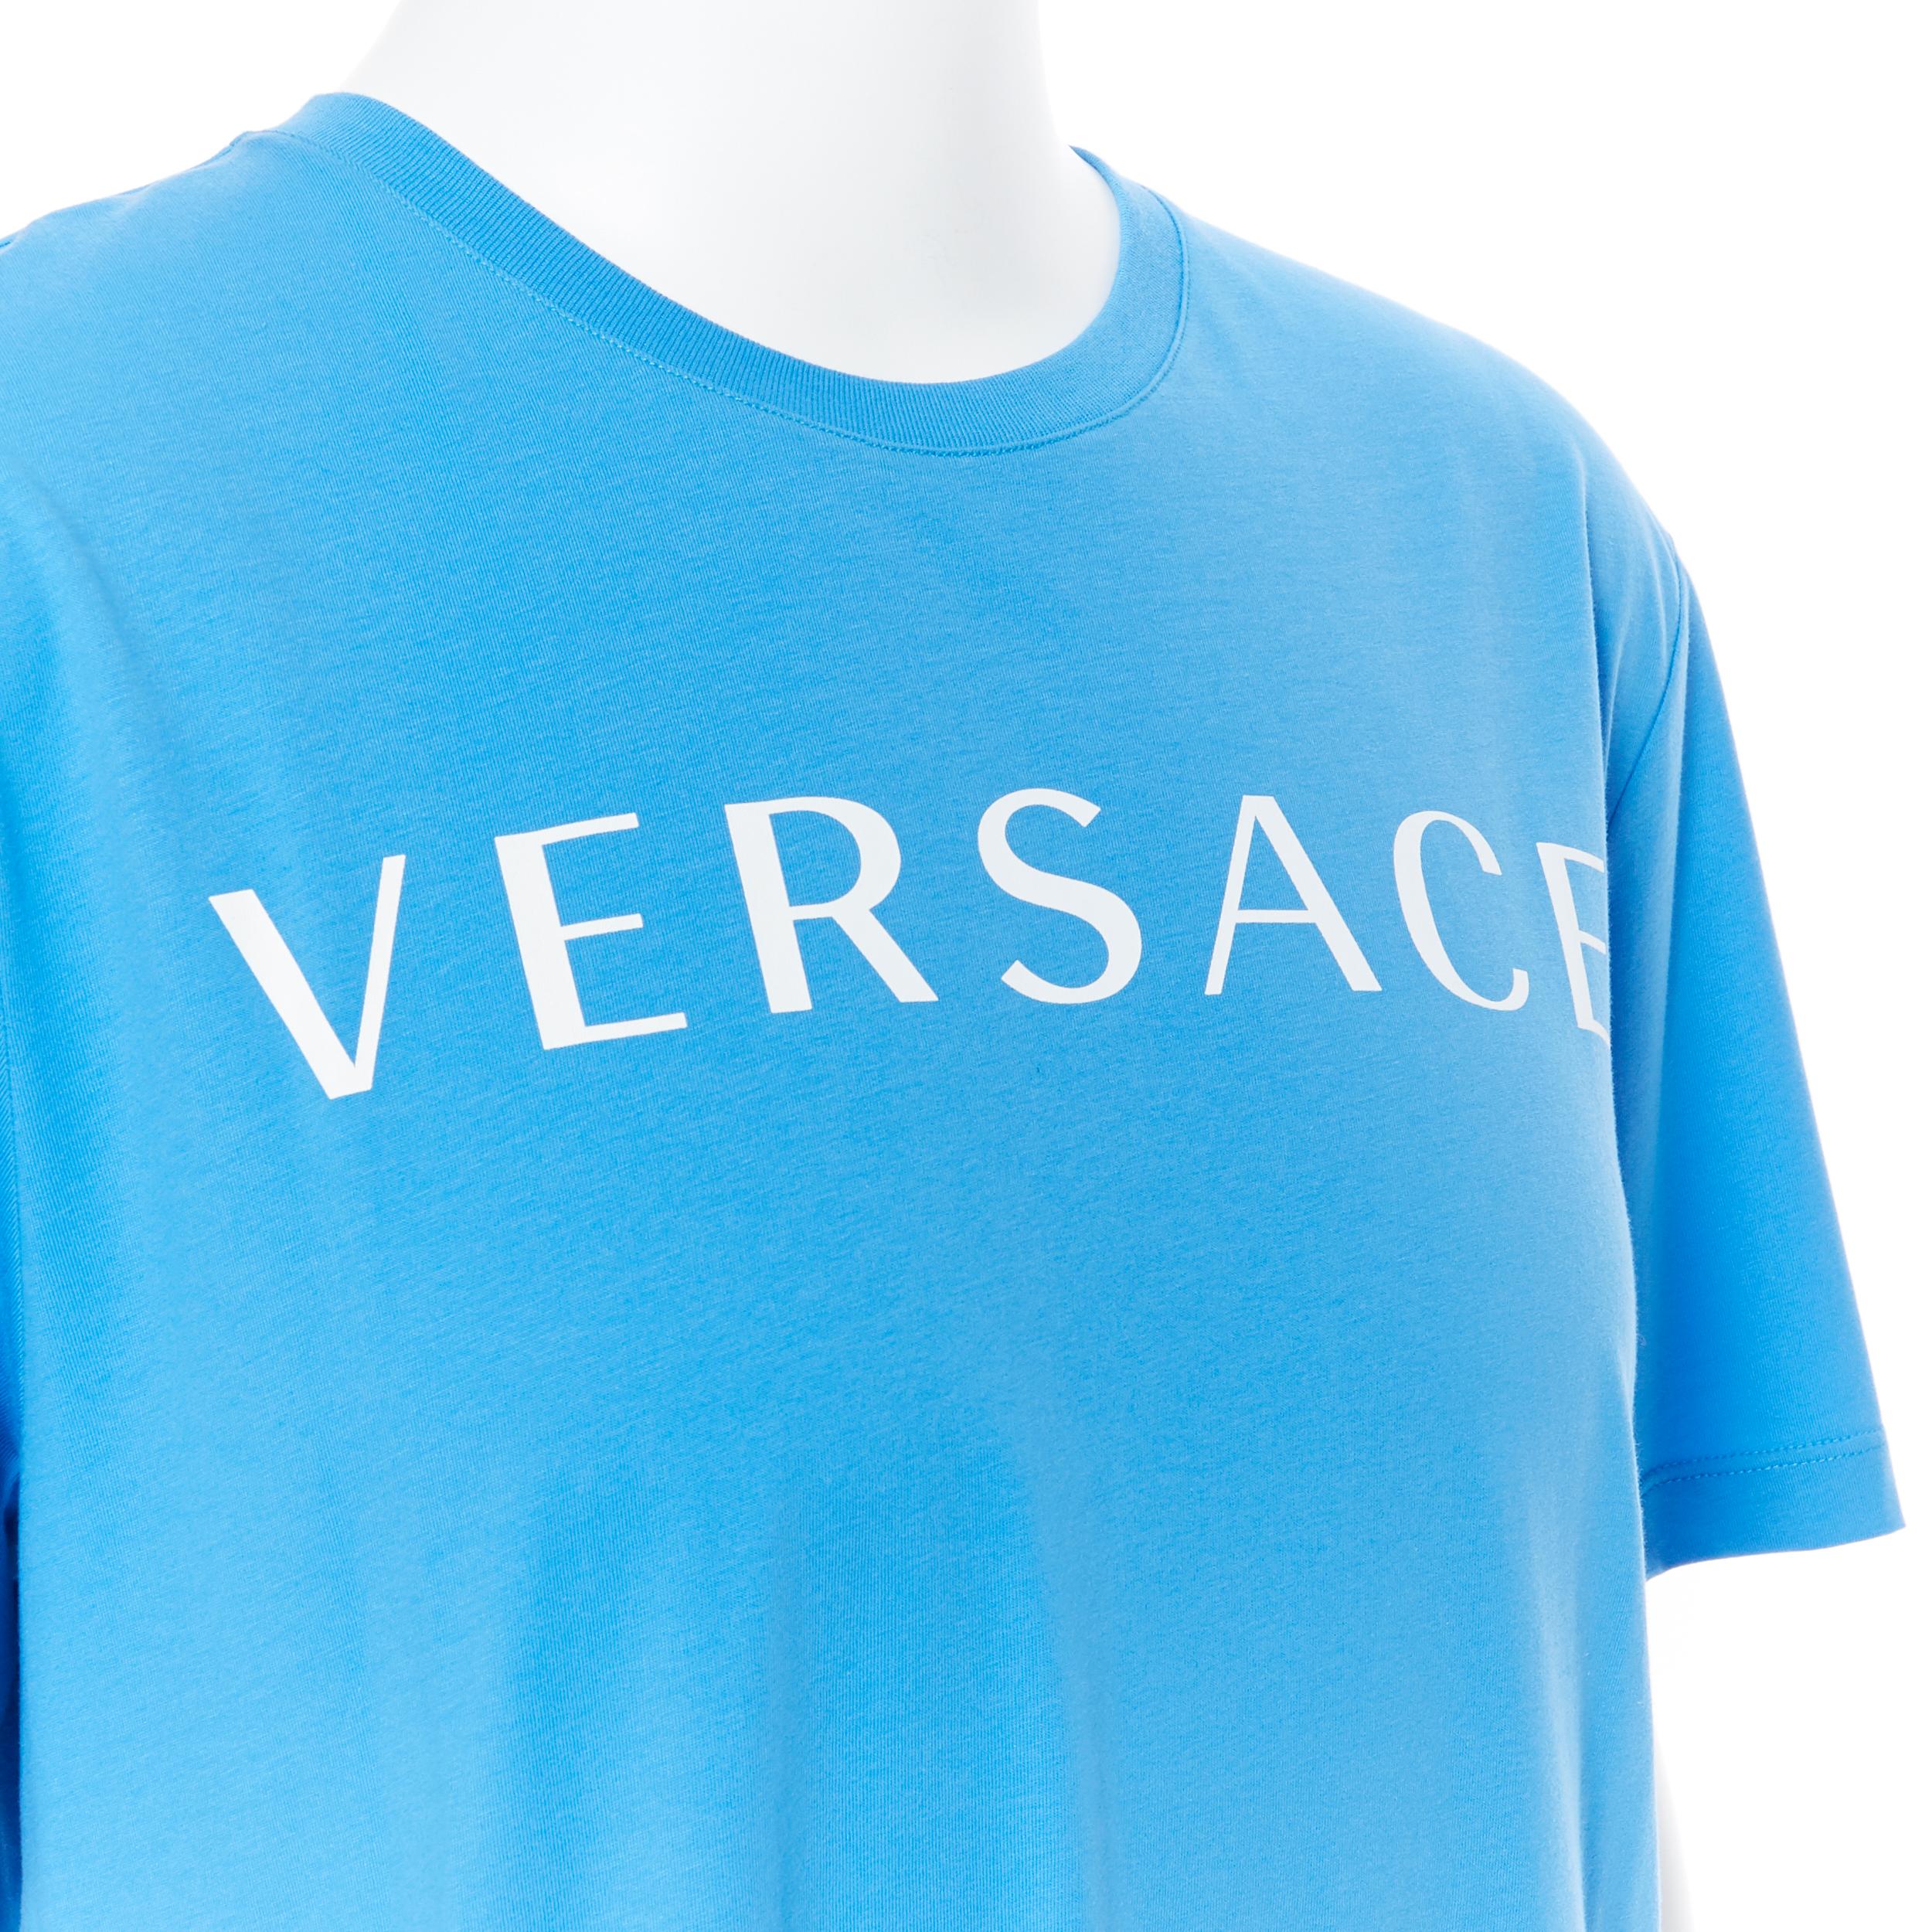 new VERSACE 2018 blue 1990's logo front Medusa print slogan t-shirt 4XL
Brand: Versace
Designer: Donatella Versace
Collection: 2018
Model Name / Style: Logo t-shirt
Material: Cotton
Color: Blue
Pattern: Other; logomania
Extra Detail: 100% cotton.